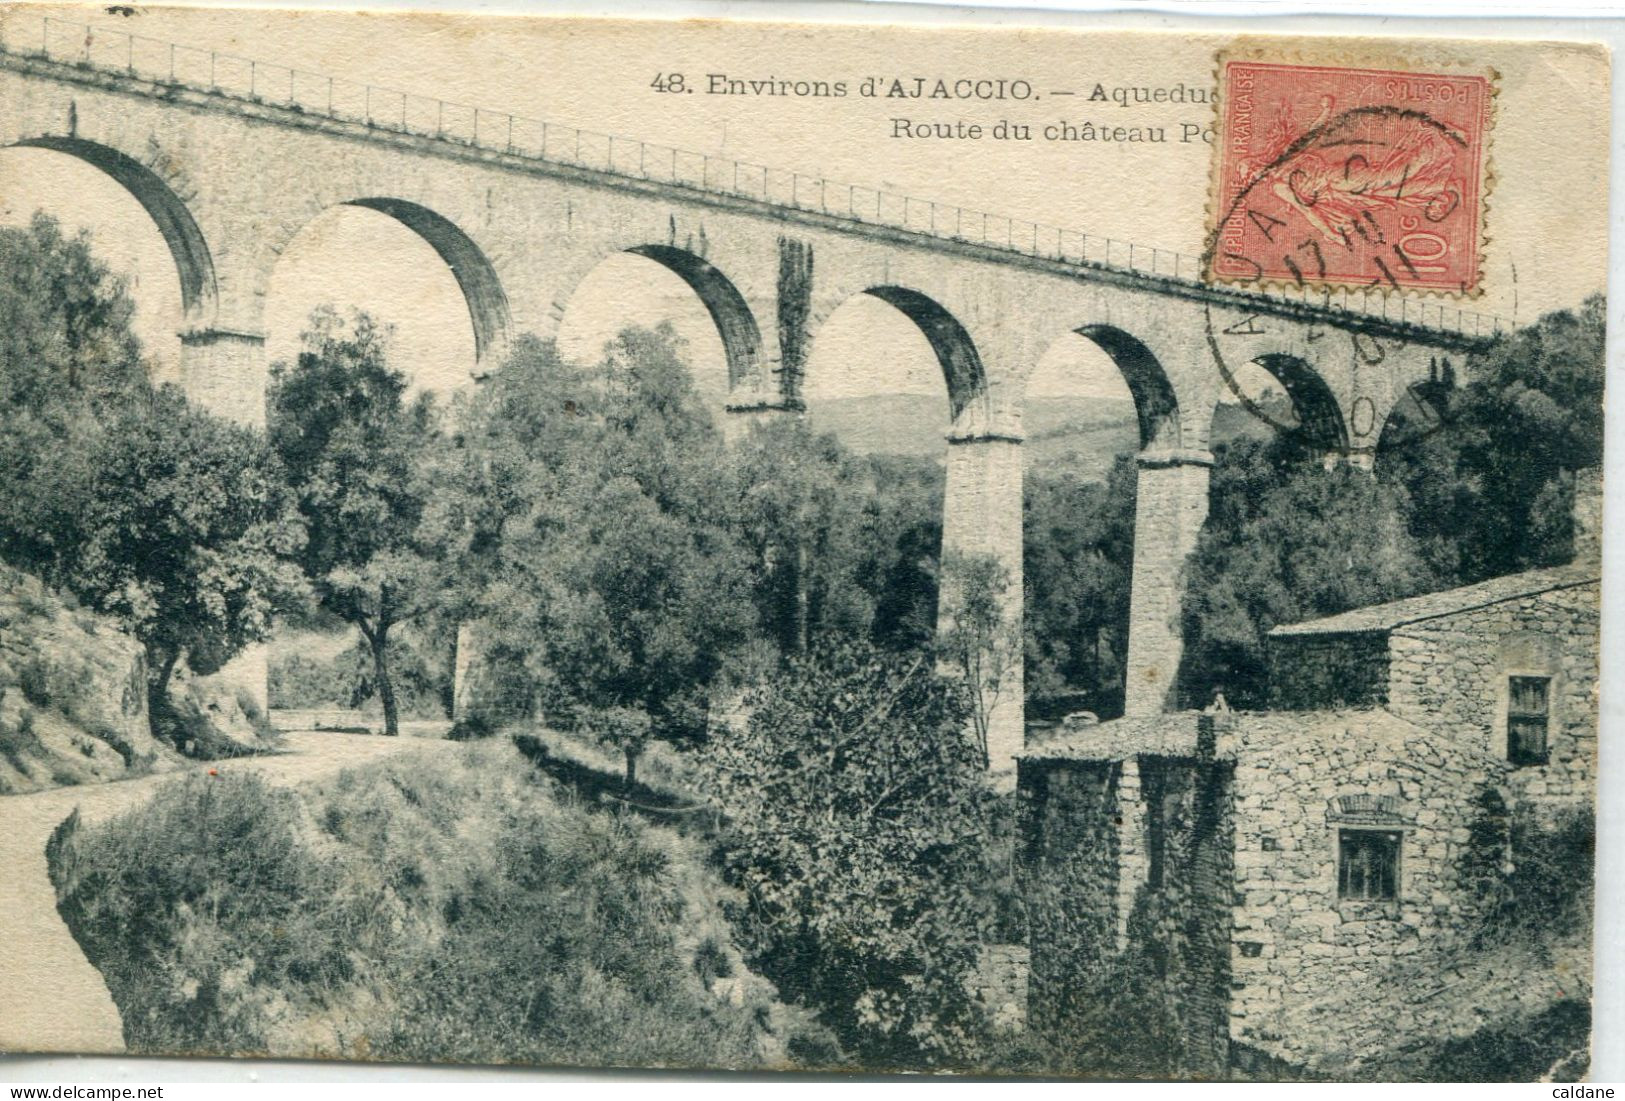 2A-CORSE  -  Environs D'AJACCIO - Aqueduc Moulin Blanc- Route Du Chateau. POZZOdi BORGO-Collection A.Guittard - Ajaccio